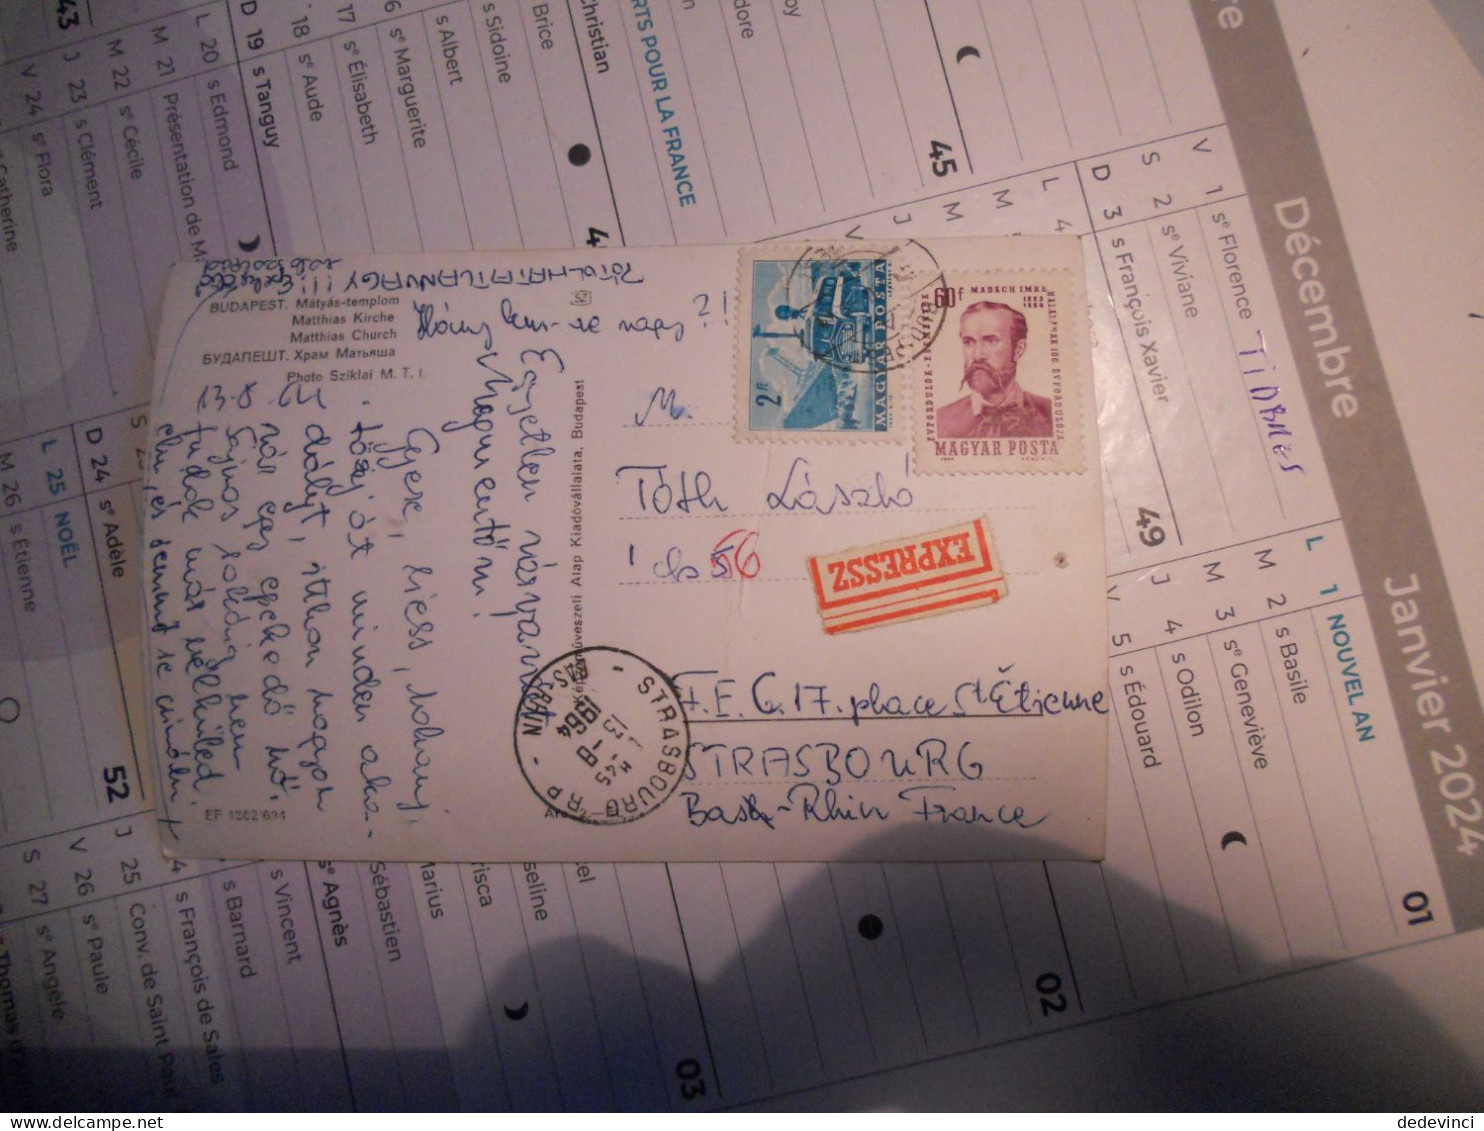 Carte Postale En Express Pour Strasbourg - Covers & Documents